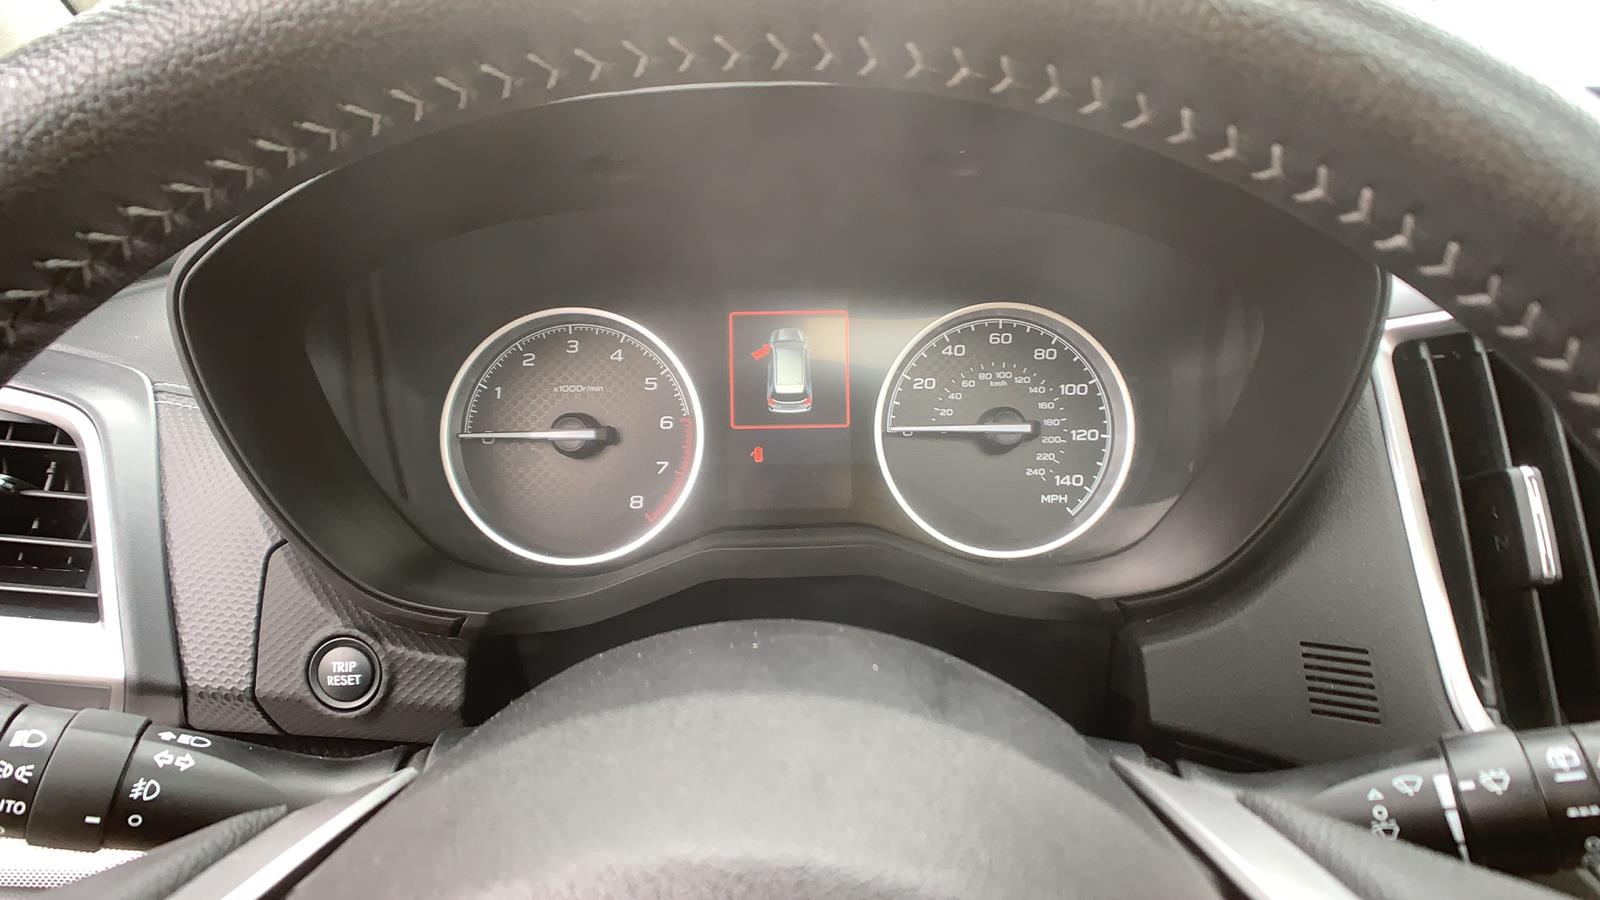 2019 Subaru Forester Sport Utility